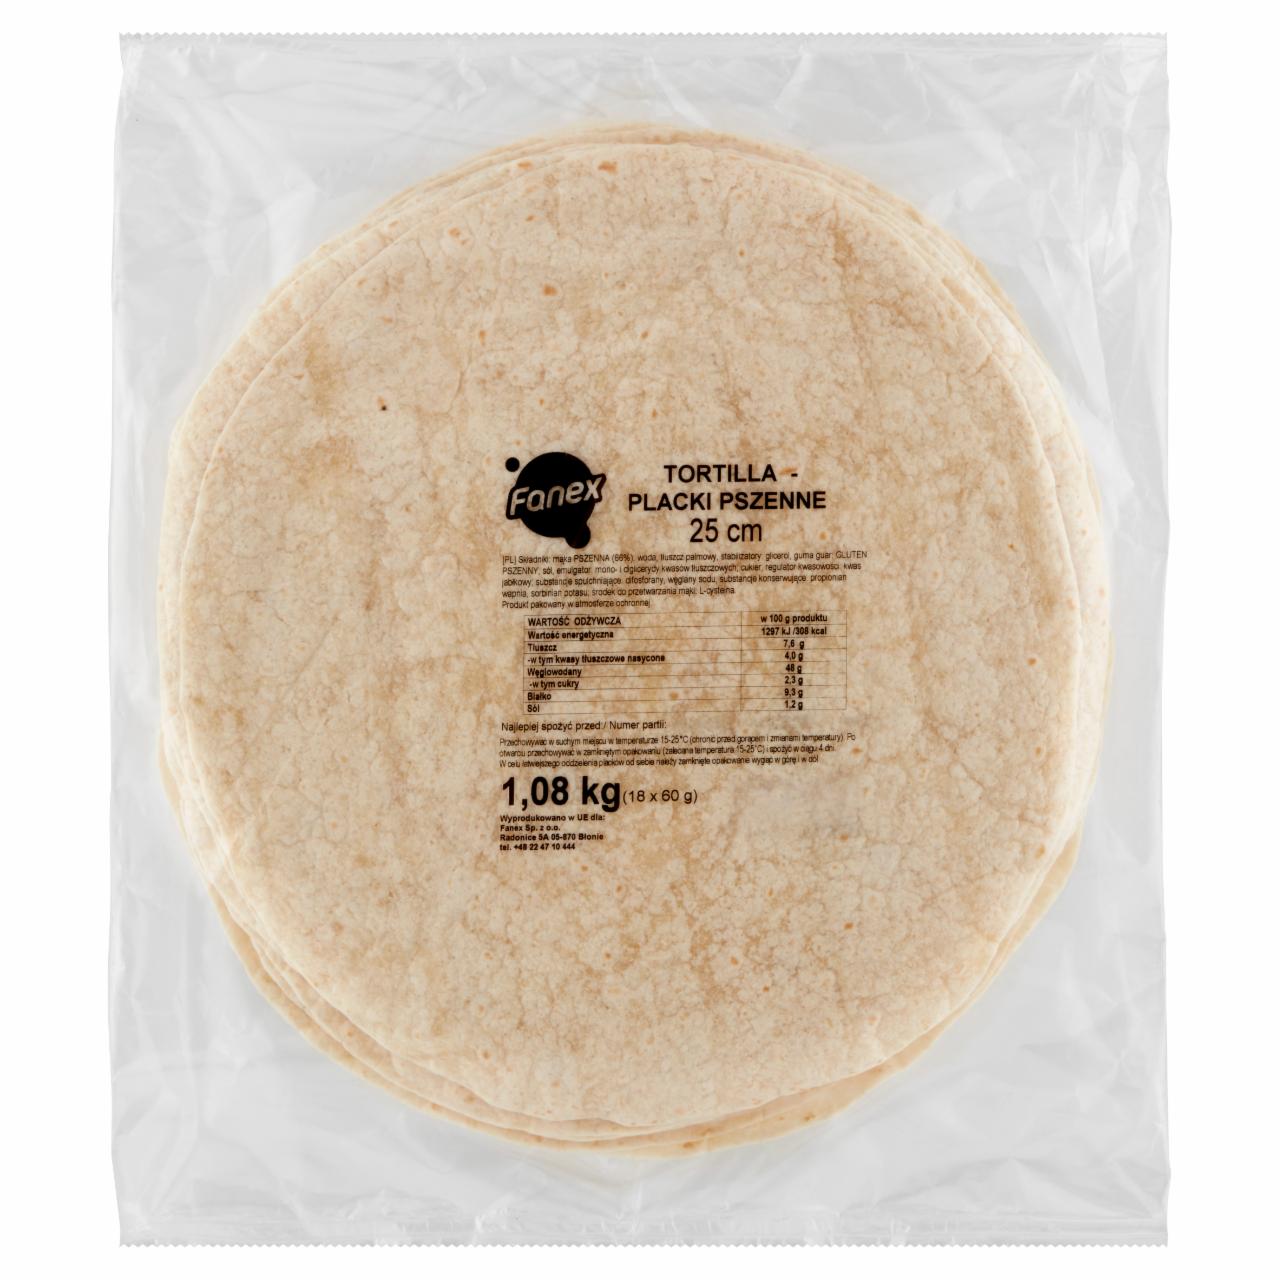 Zdjęcia - Fanex Tortilla placki pszenne 25 cm 1,08 kg (18 x 60 g)